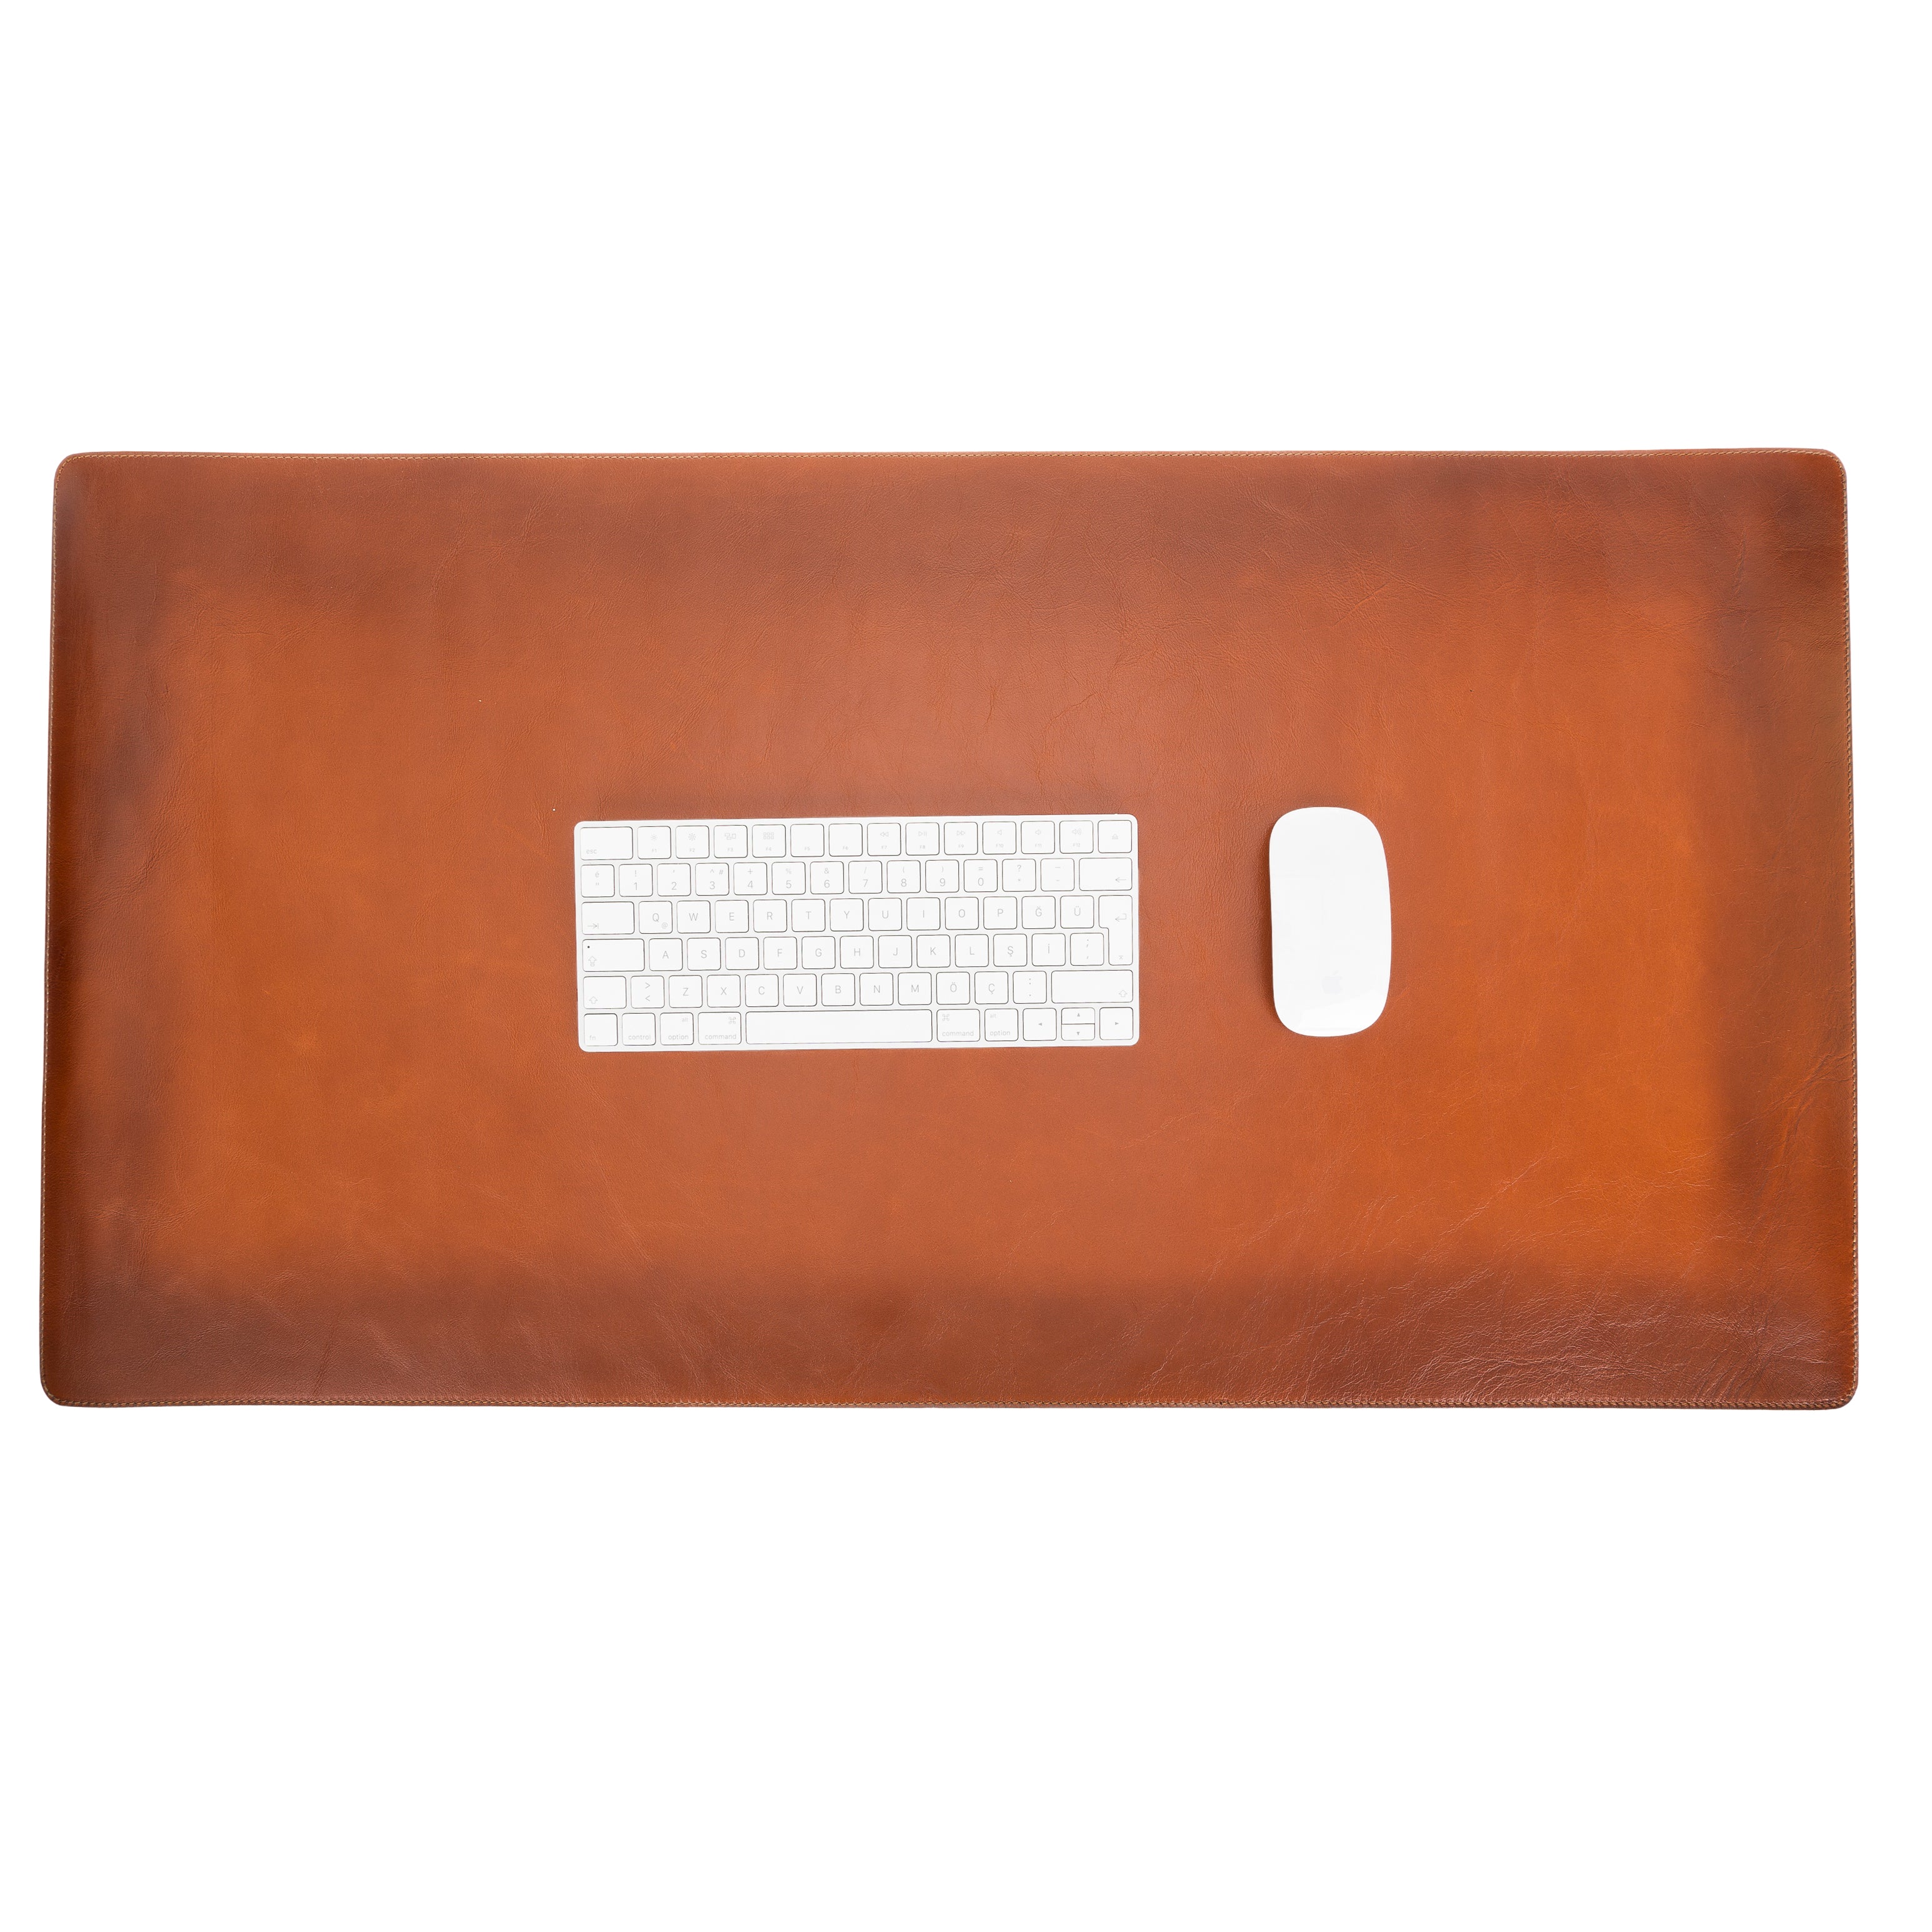 DelfiCase Genuine Leather Deskmat, Computer Pad, Office Desk Pad (Brown) 11